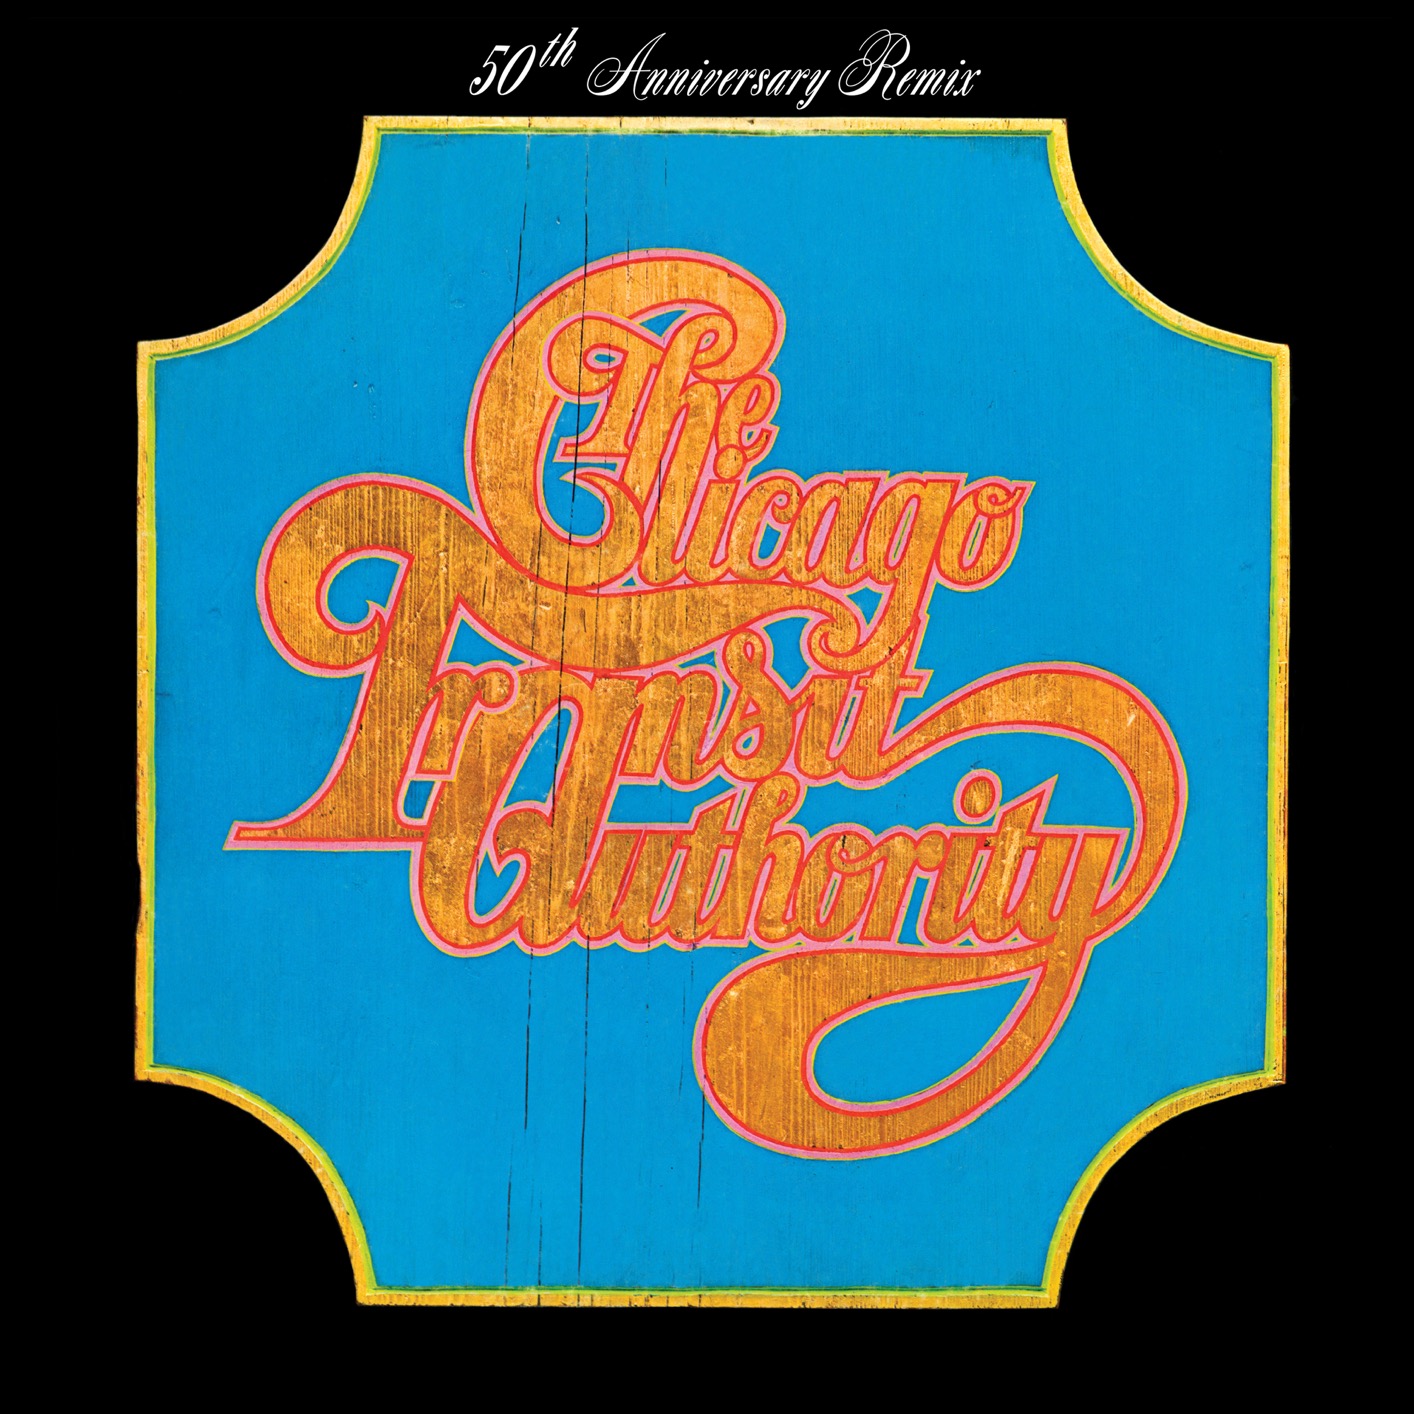 Chicago - Chicago Transit Authority (50th Anniversary Remix) (1969/2019) [FLAC 24bit/96kHz]